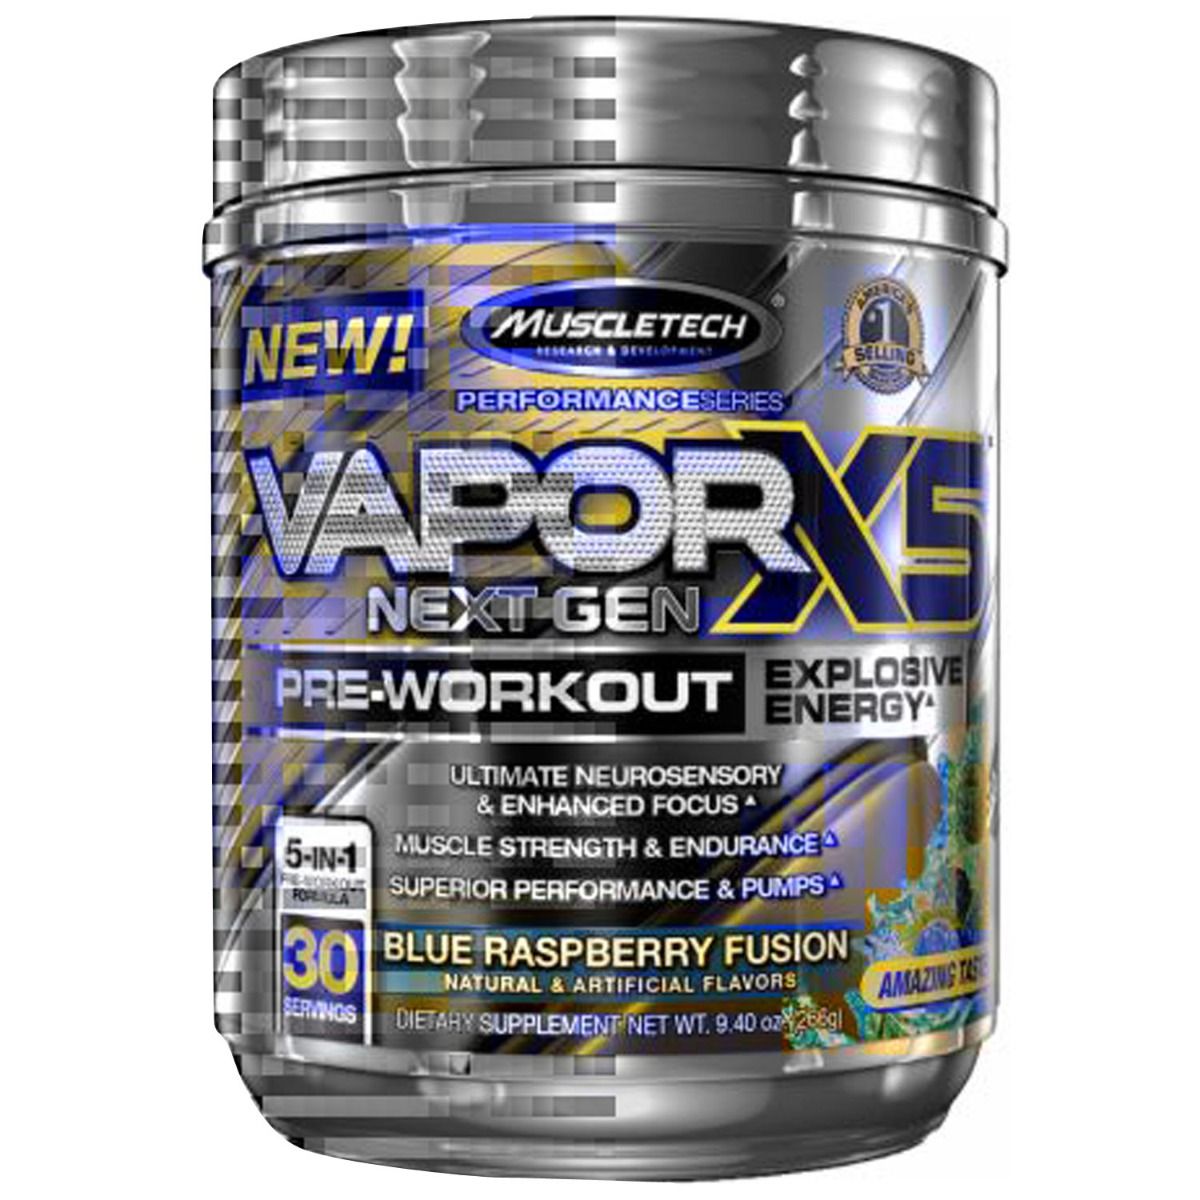 Buy Muscletech Performance Series Vaporx5 Next Gen Pre-workout Blue Raspberry Fusion Flavour Powder, 266 gm Online